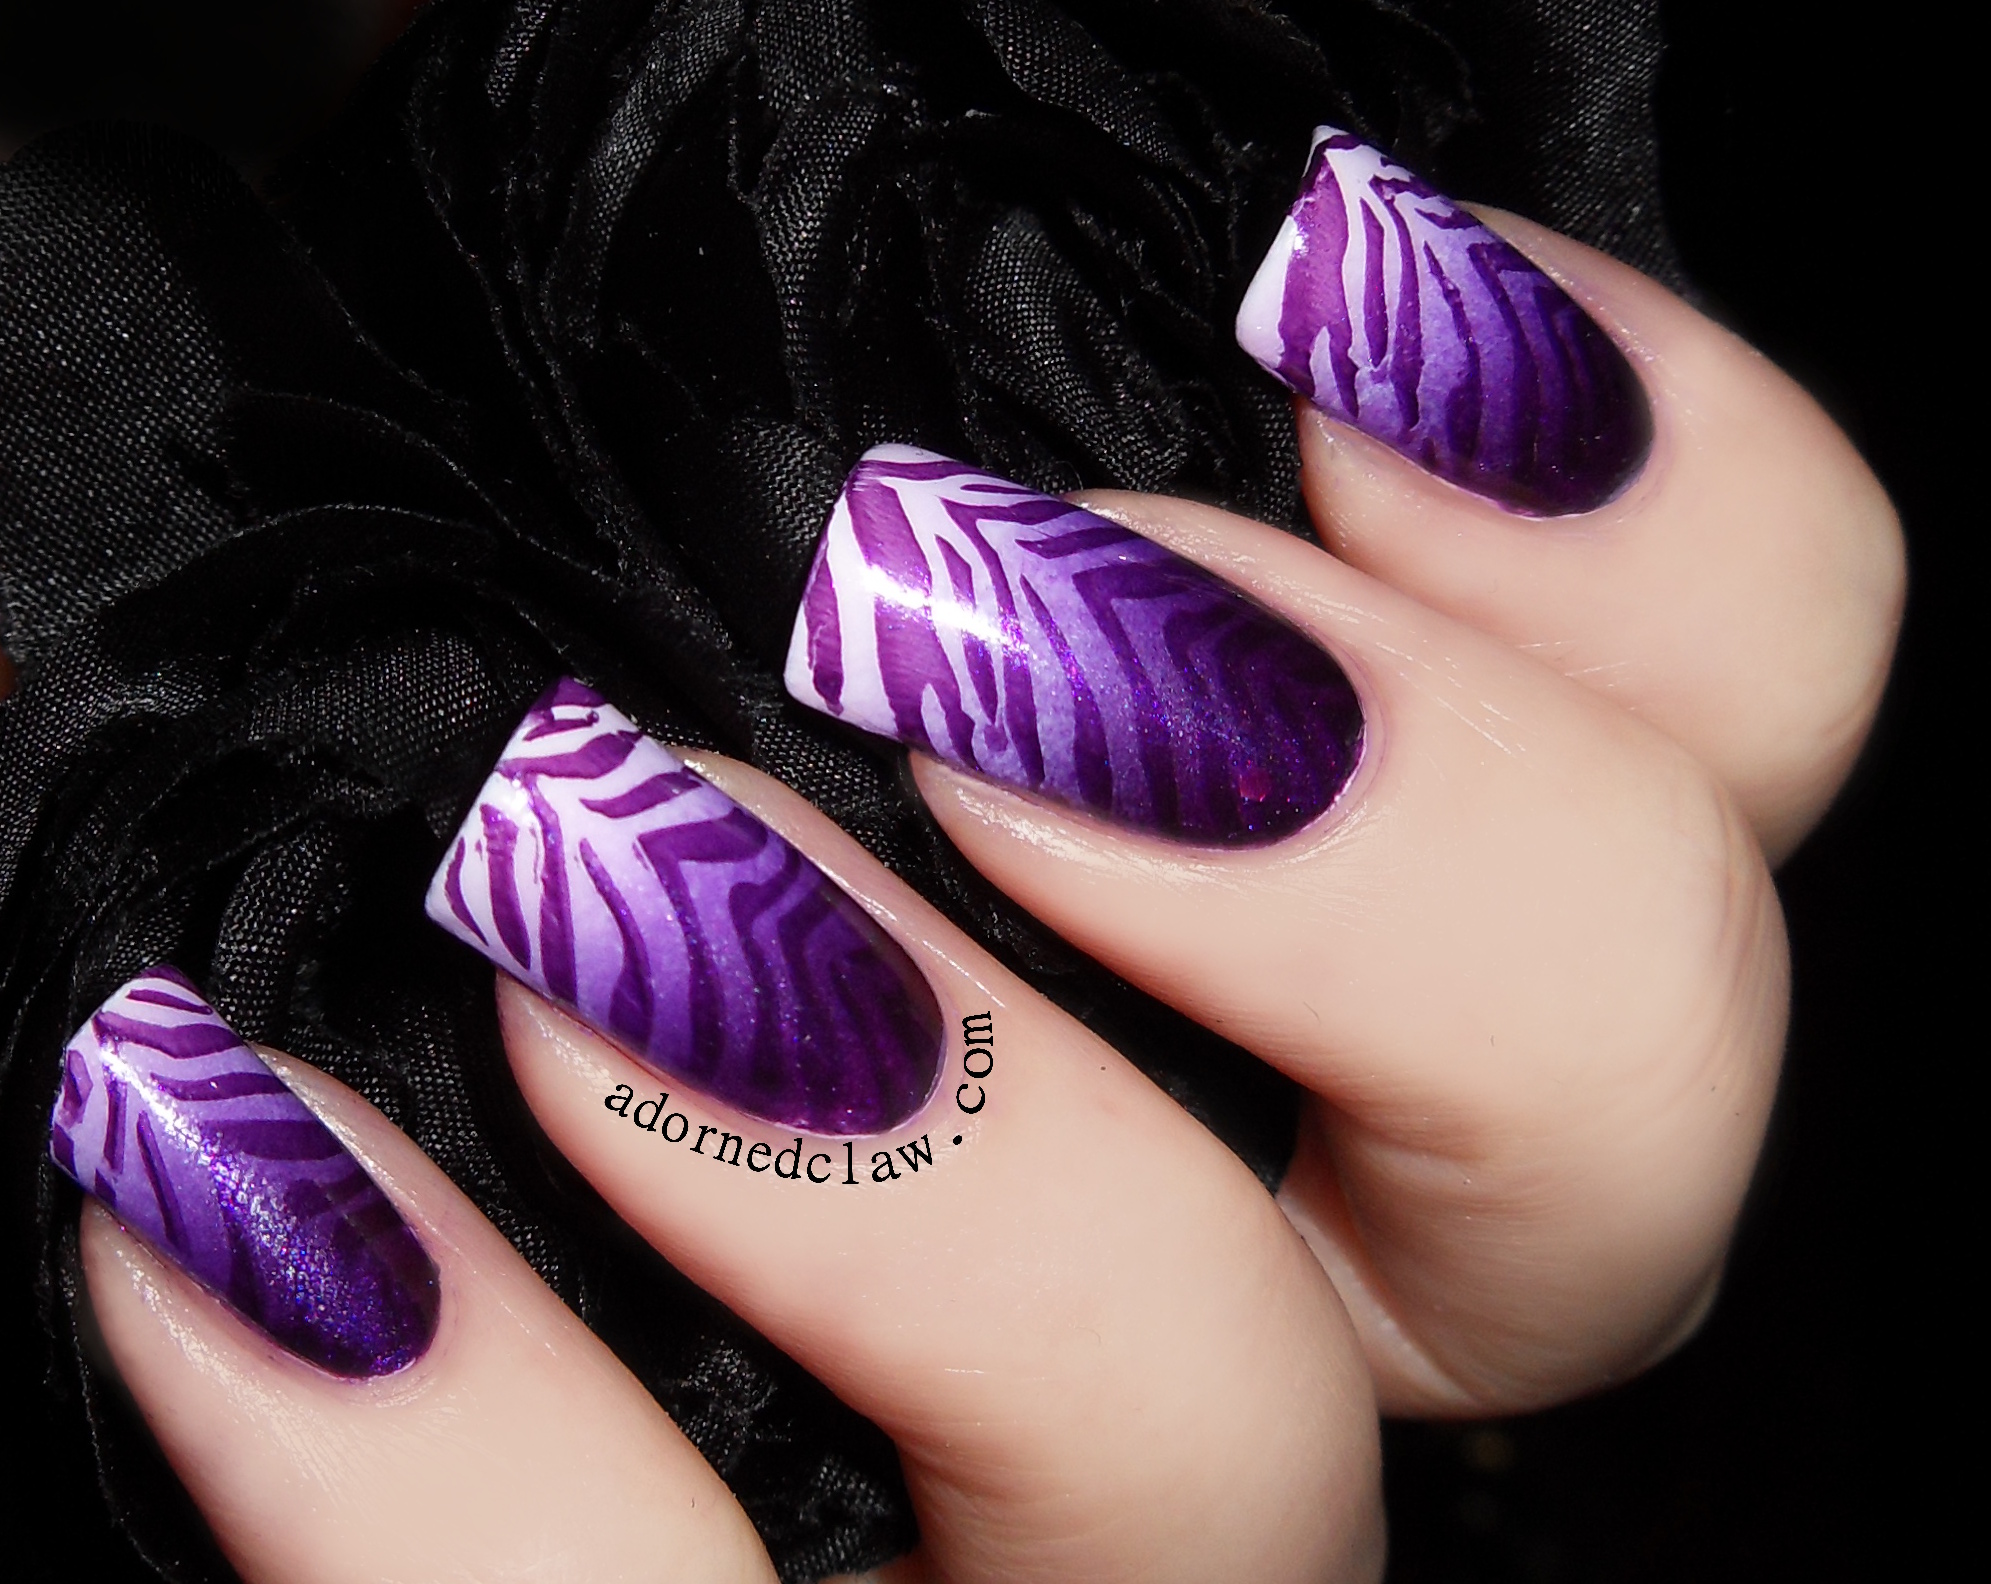 https://adornedclaw.files.wordpress.com/2014/03/purple-zebra-moyou-pro-illamasqua-china-glaze-nail-art.jpg